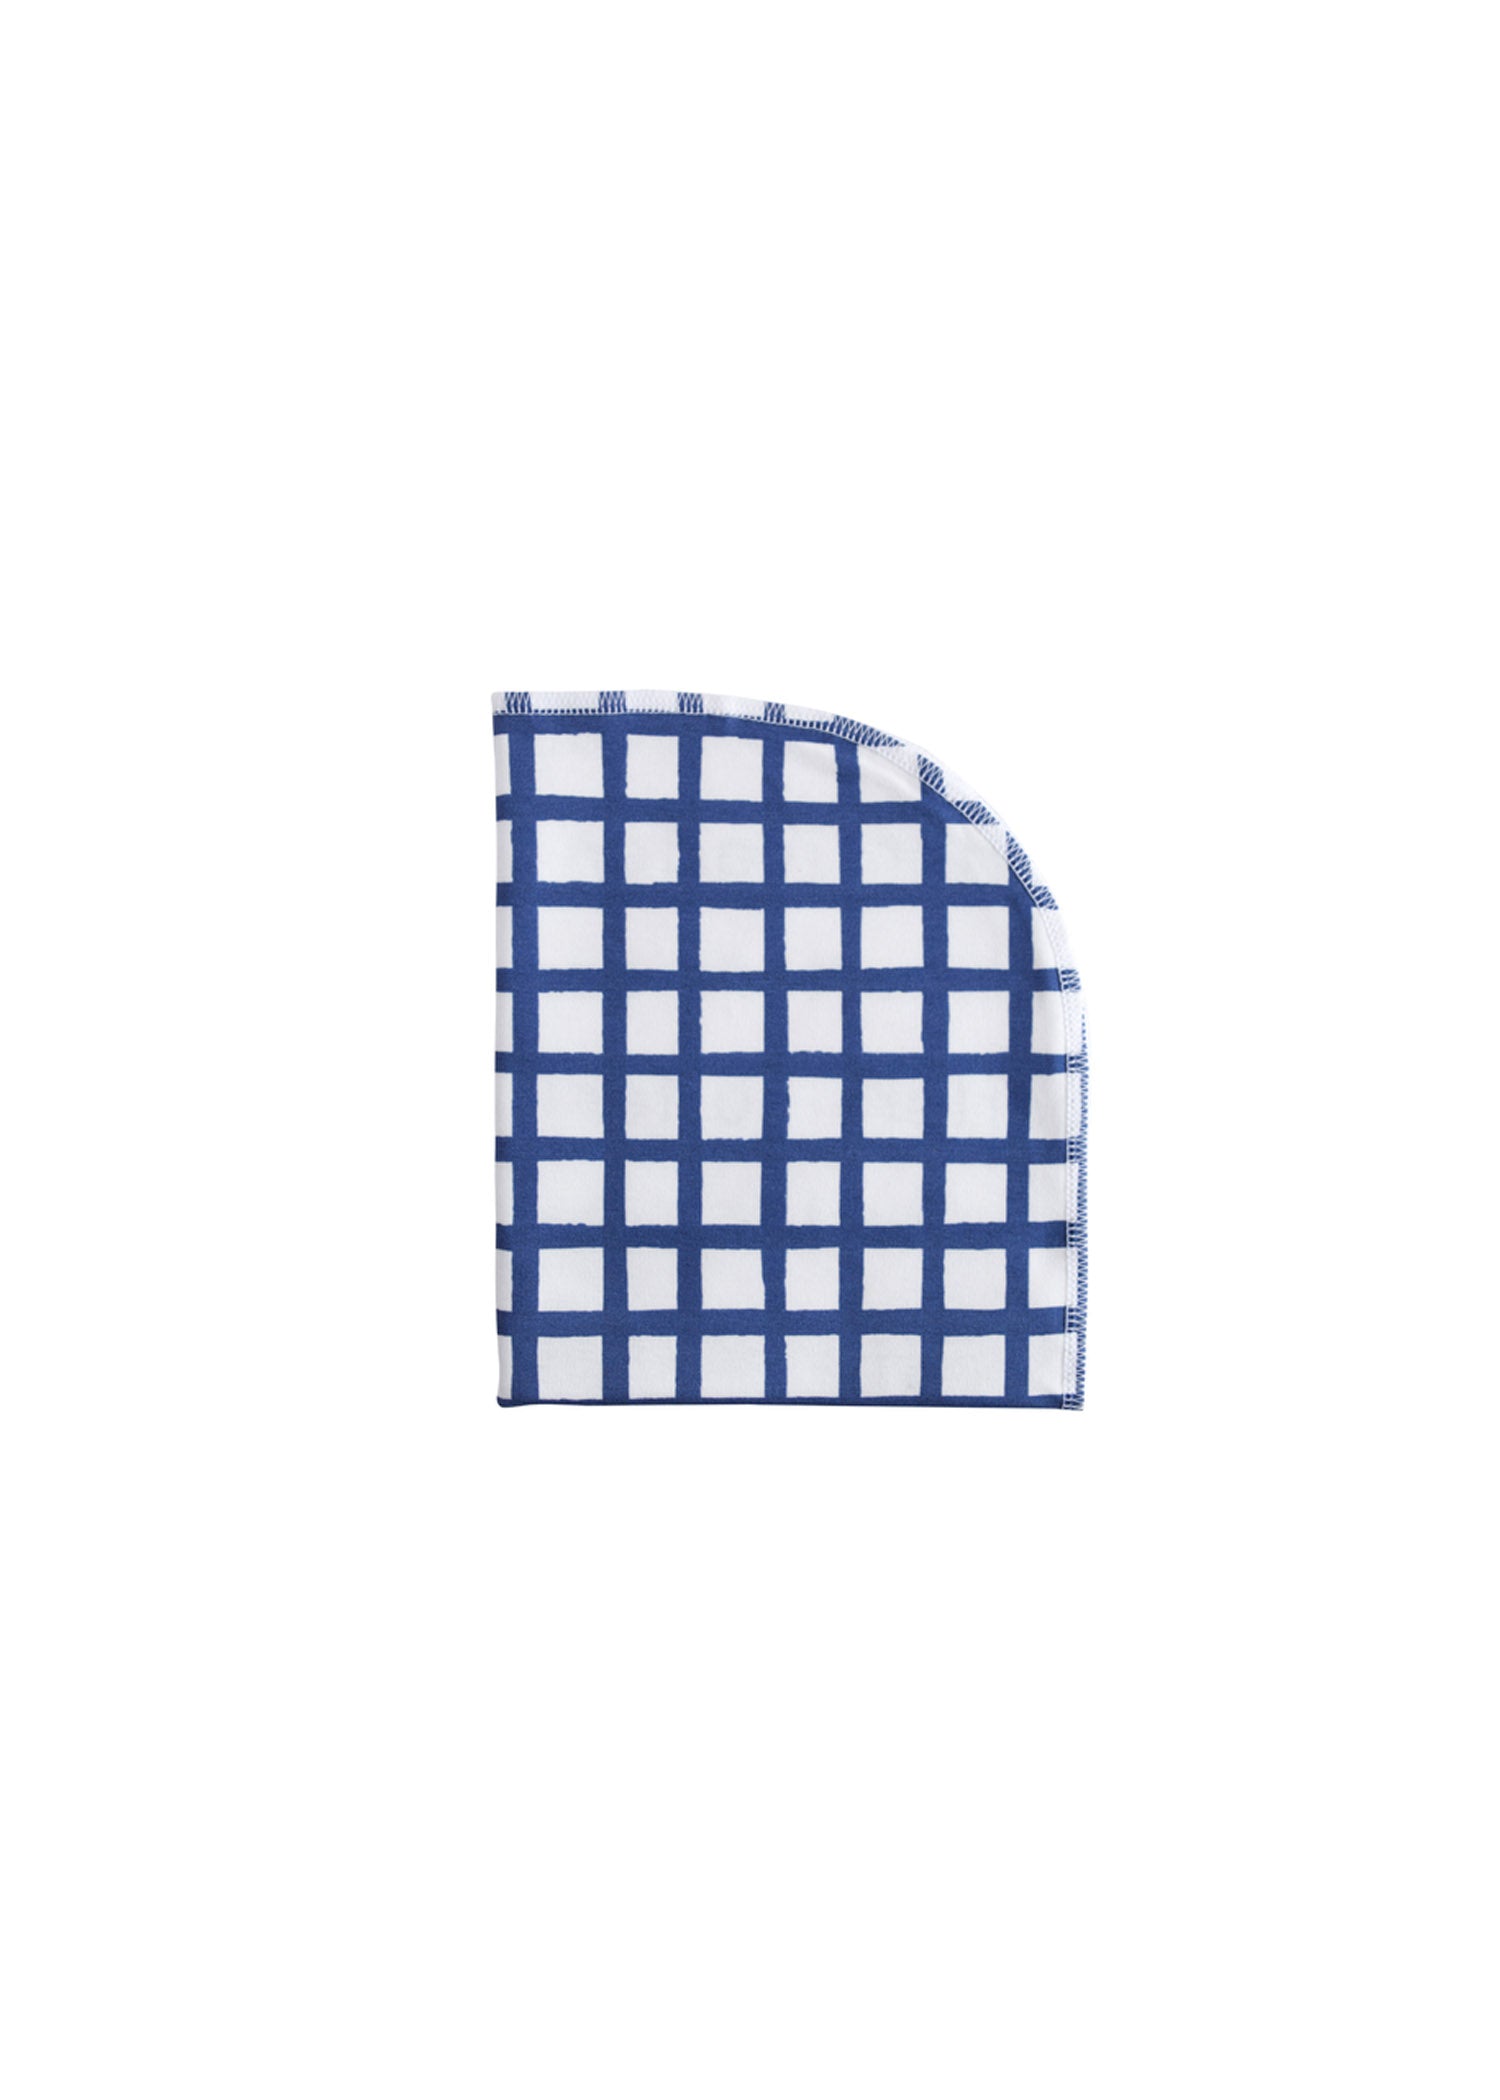 Geometric Grid Print Blanket or Bib - FINAL SALE Home & Lifestyle Blanket